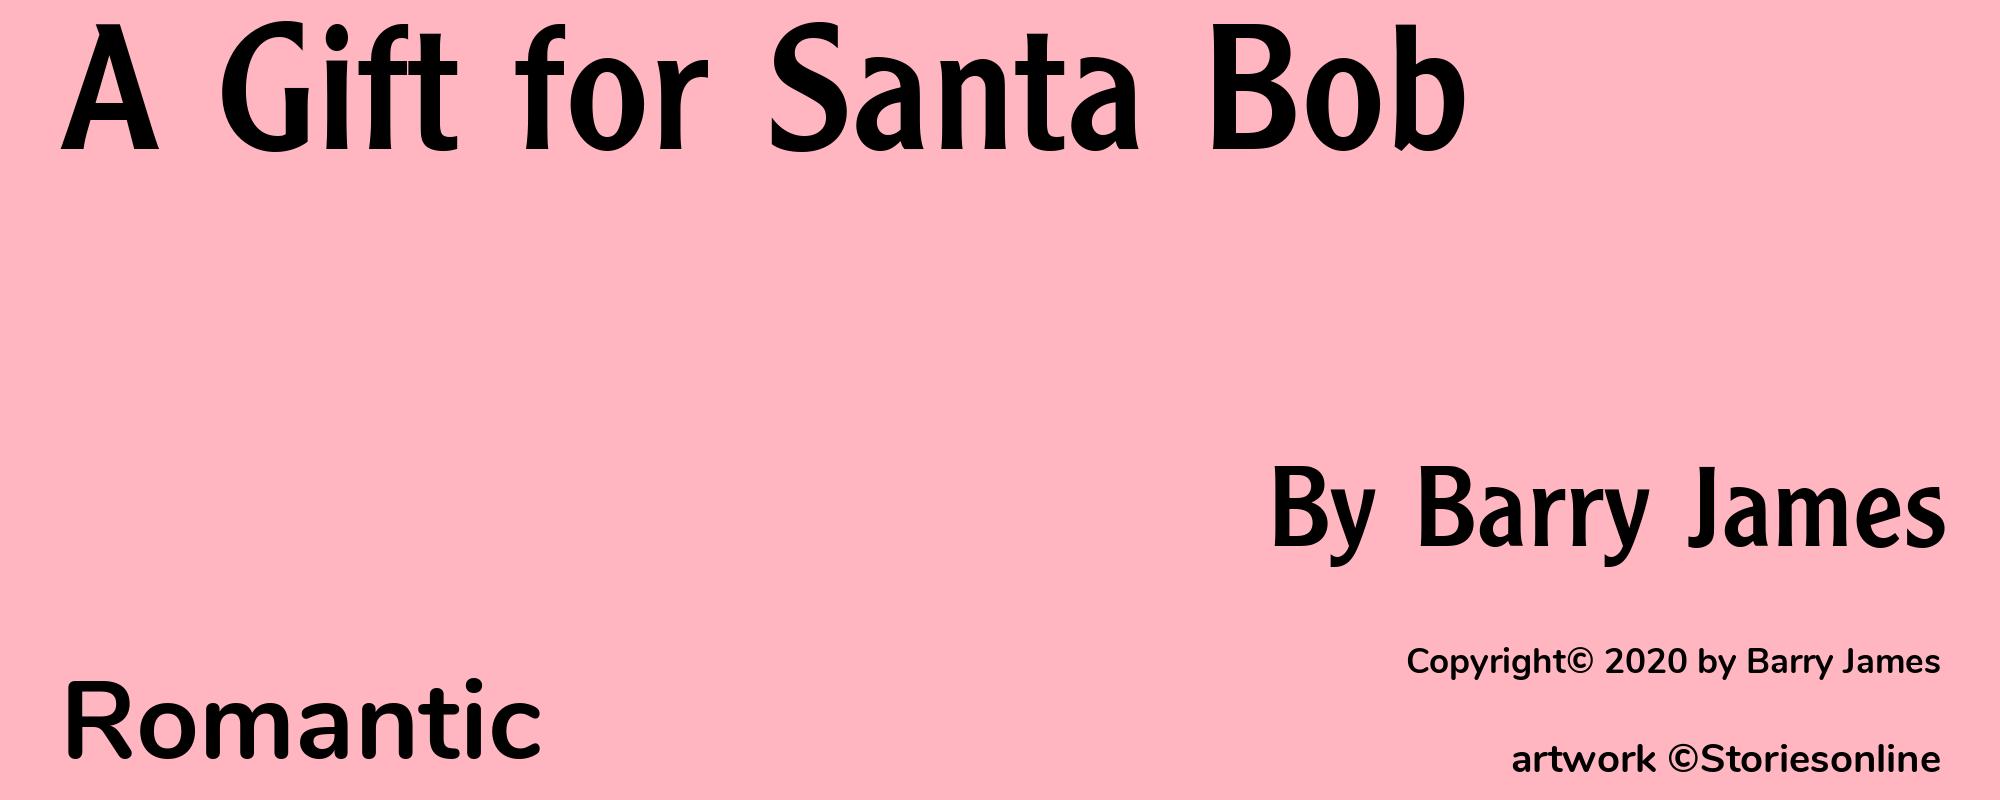 A Gift for Santa Bob - Cover